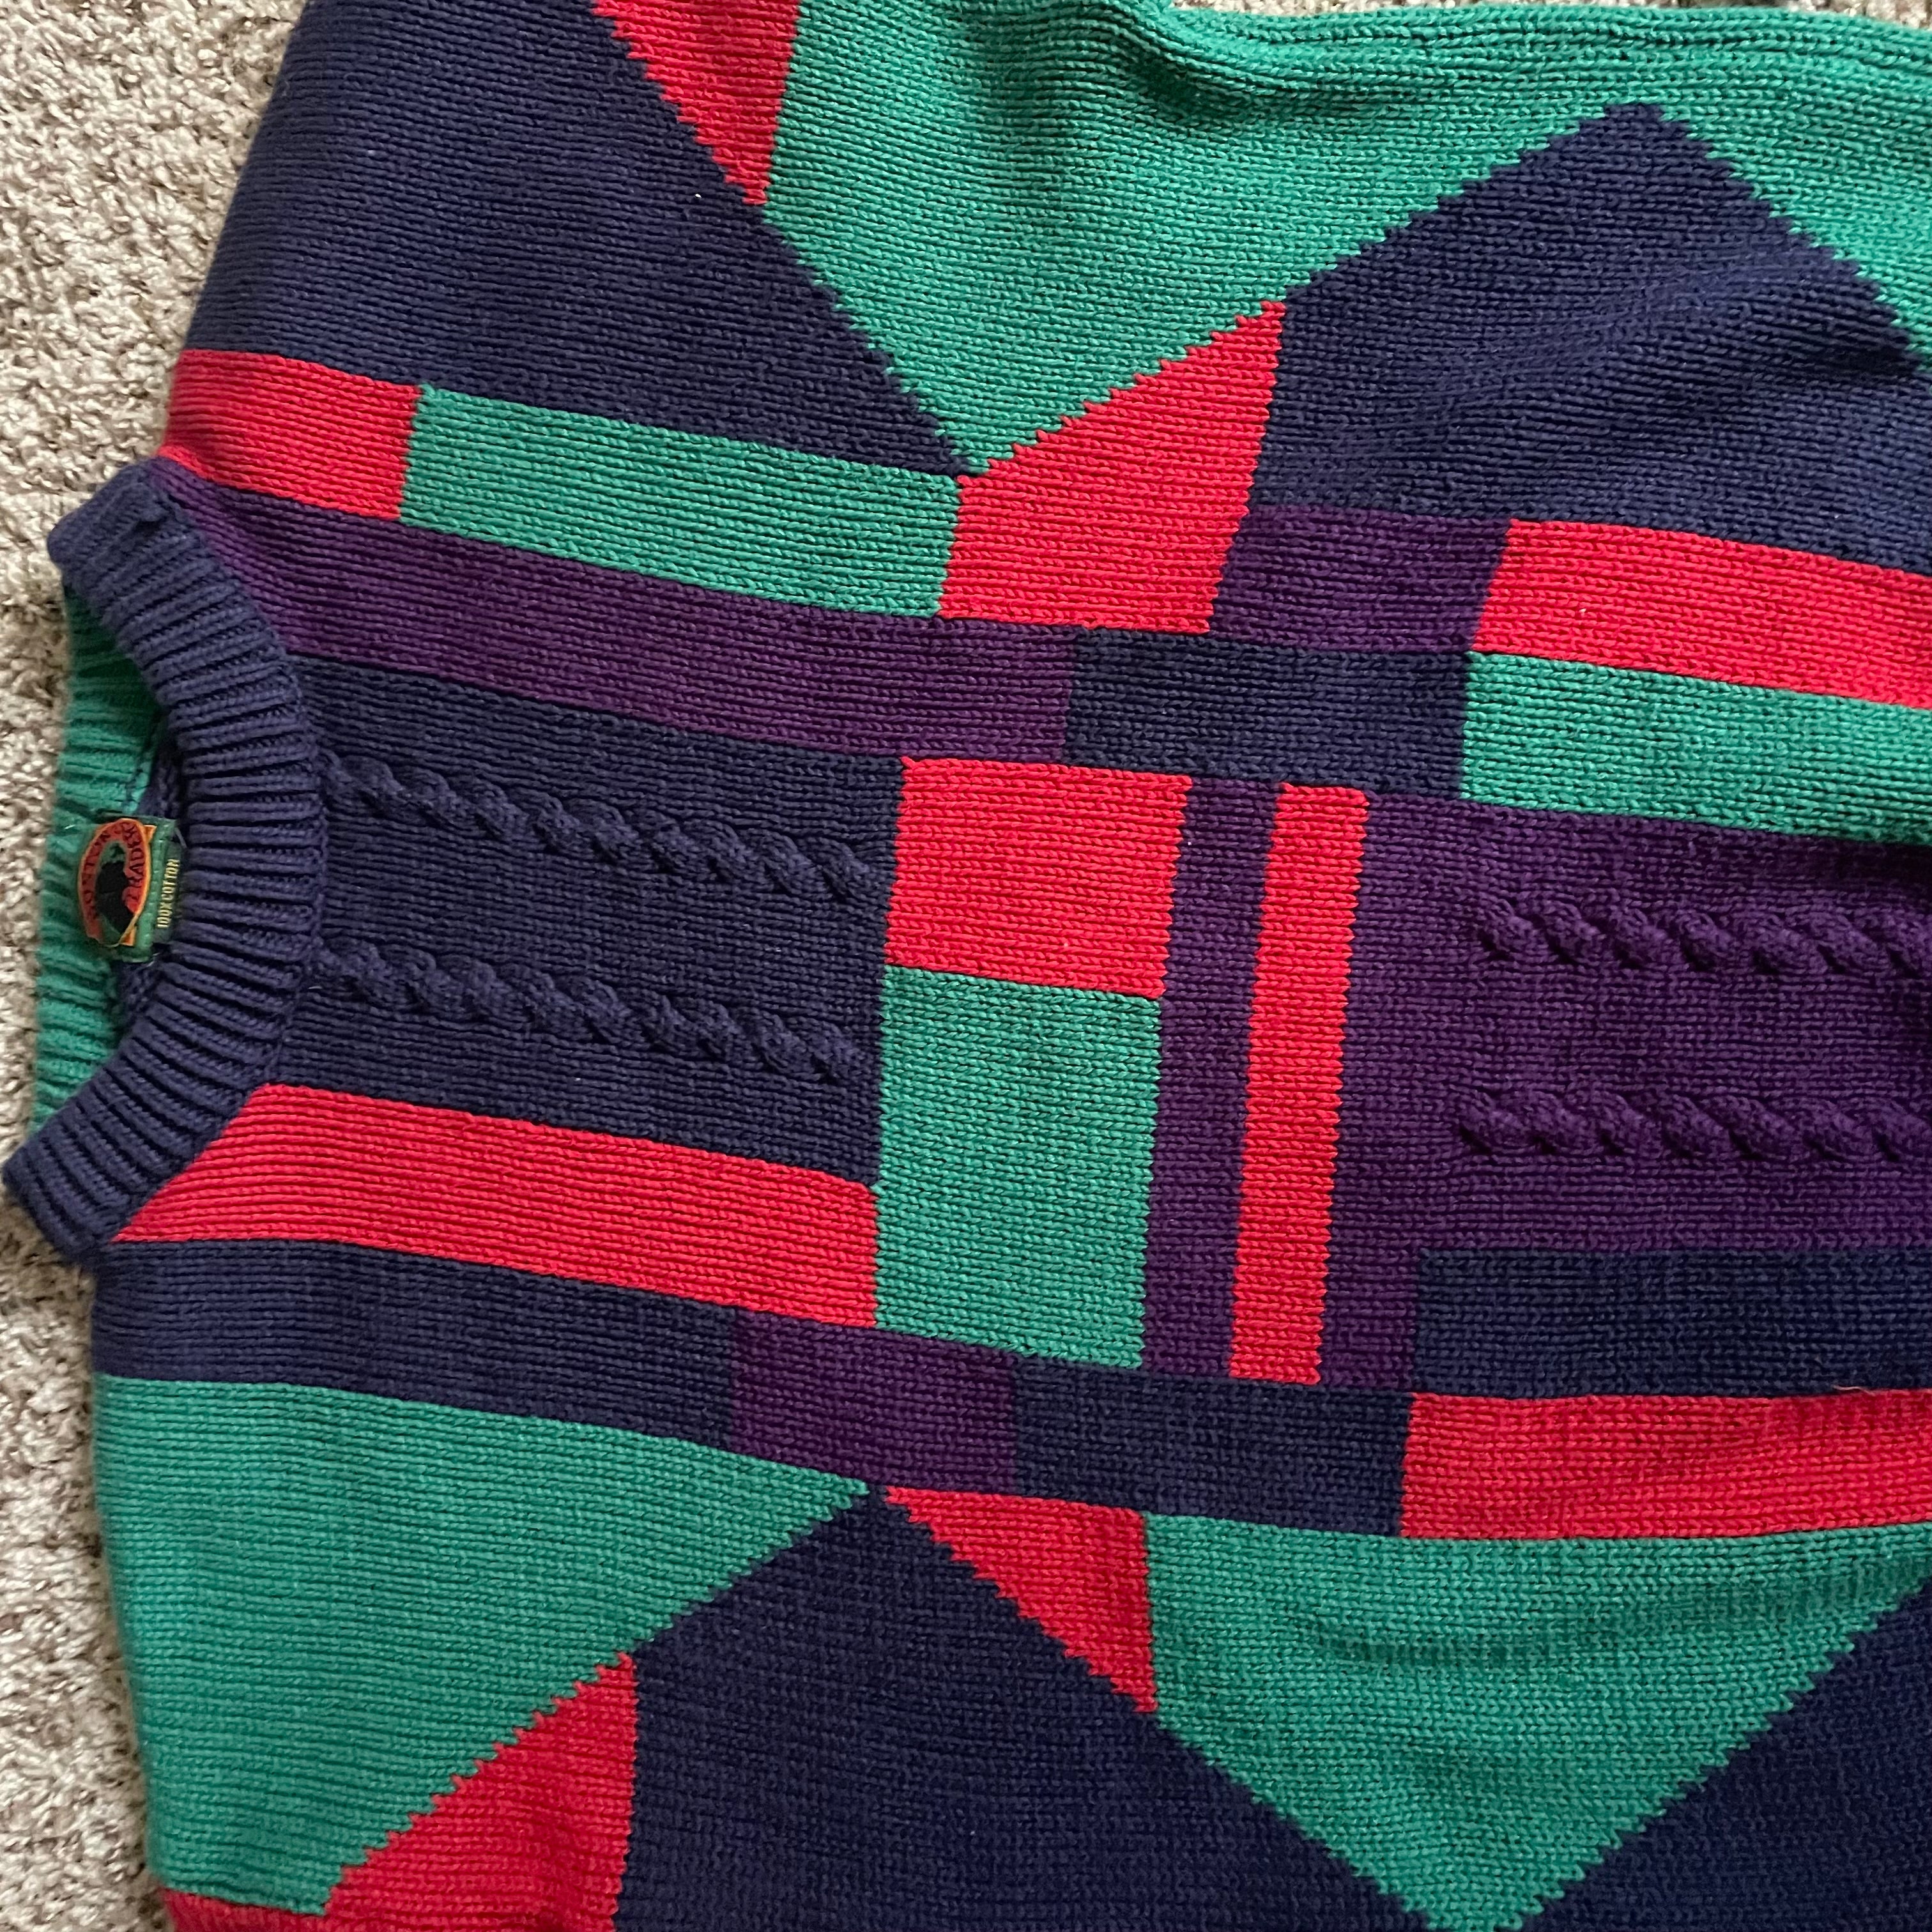 Vintage block sweater